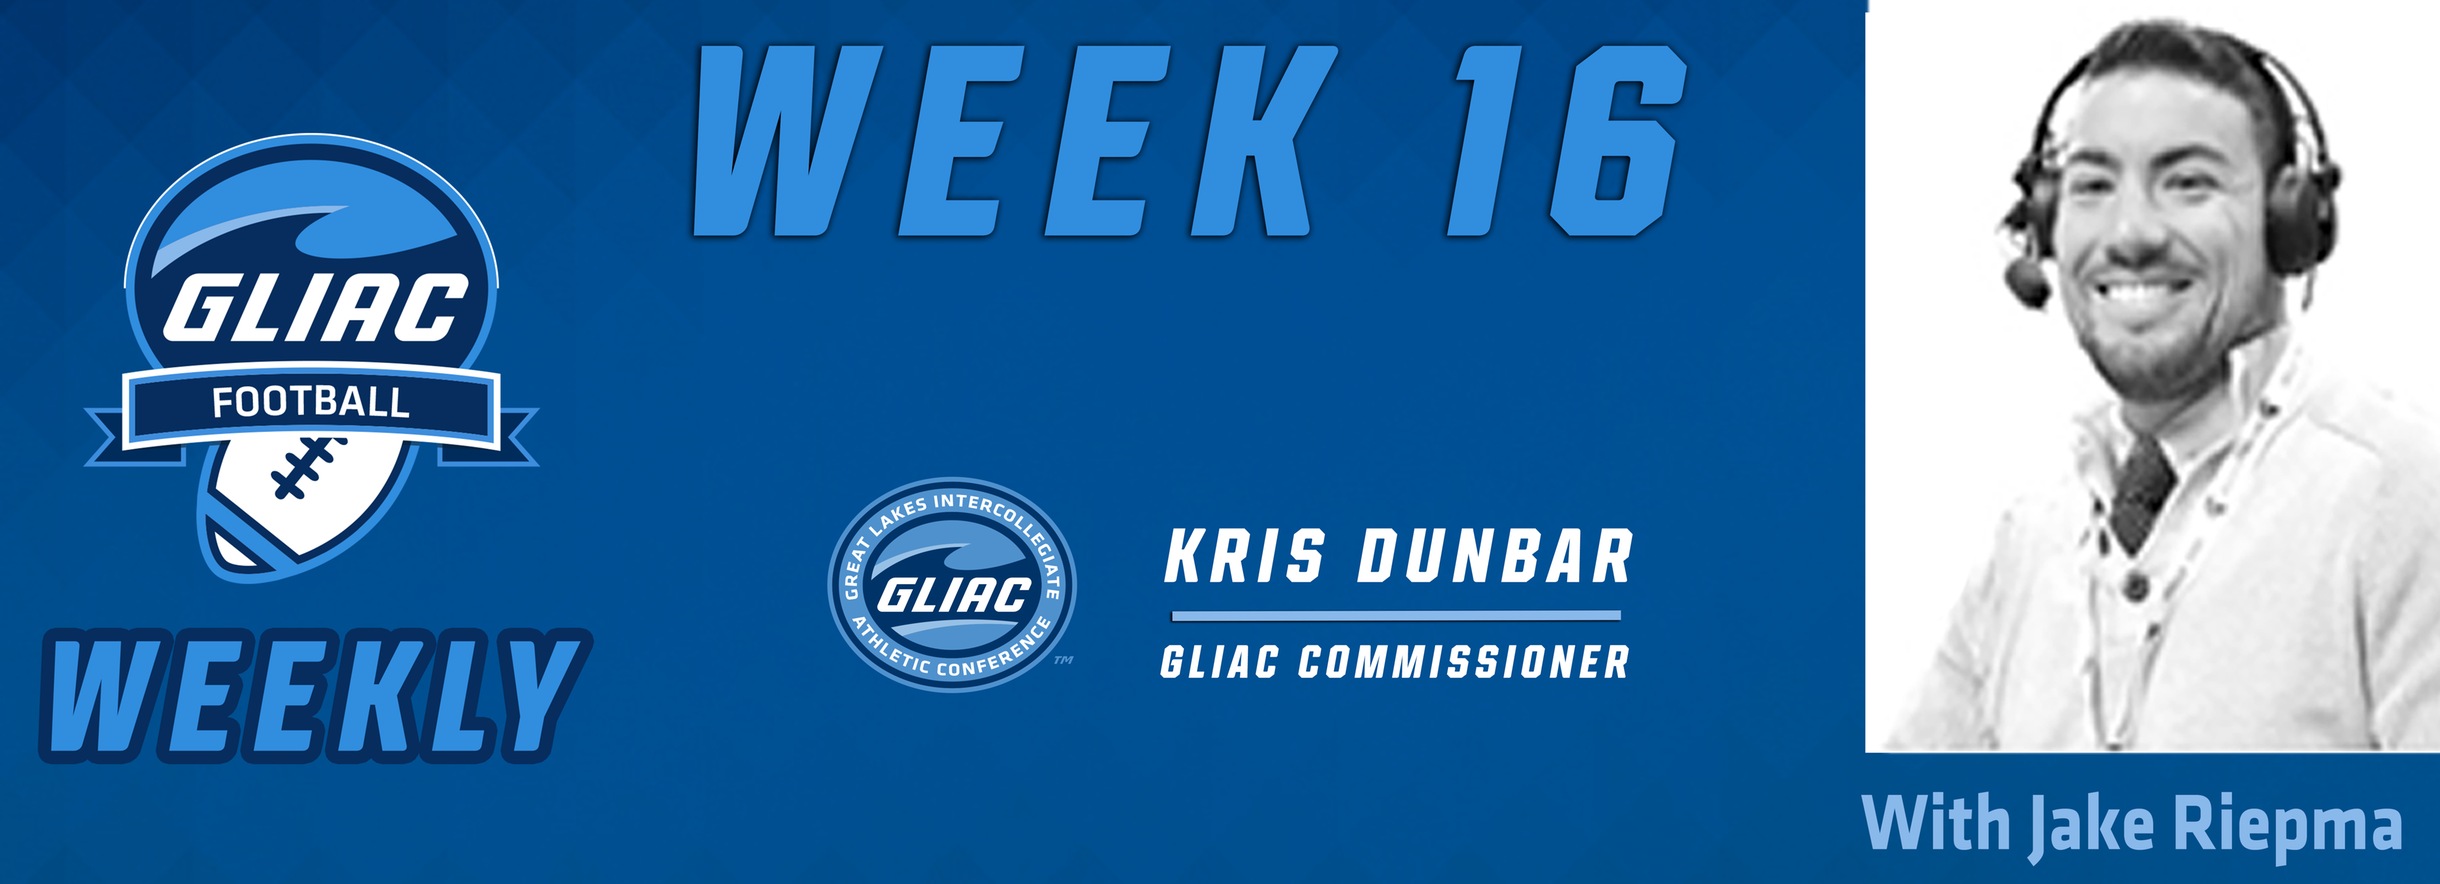 Football Weekly - Week 16 | GLIAC Commissioner Kris Dunbar